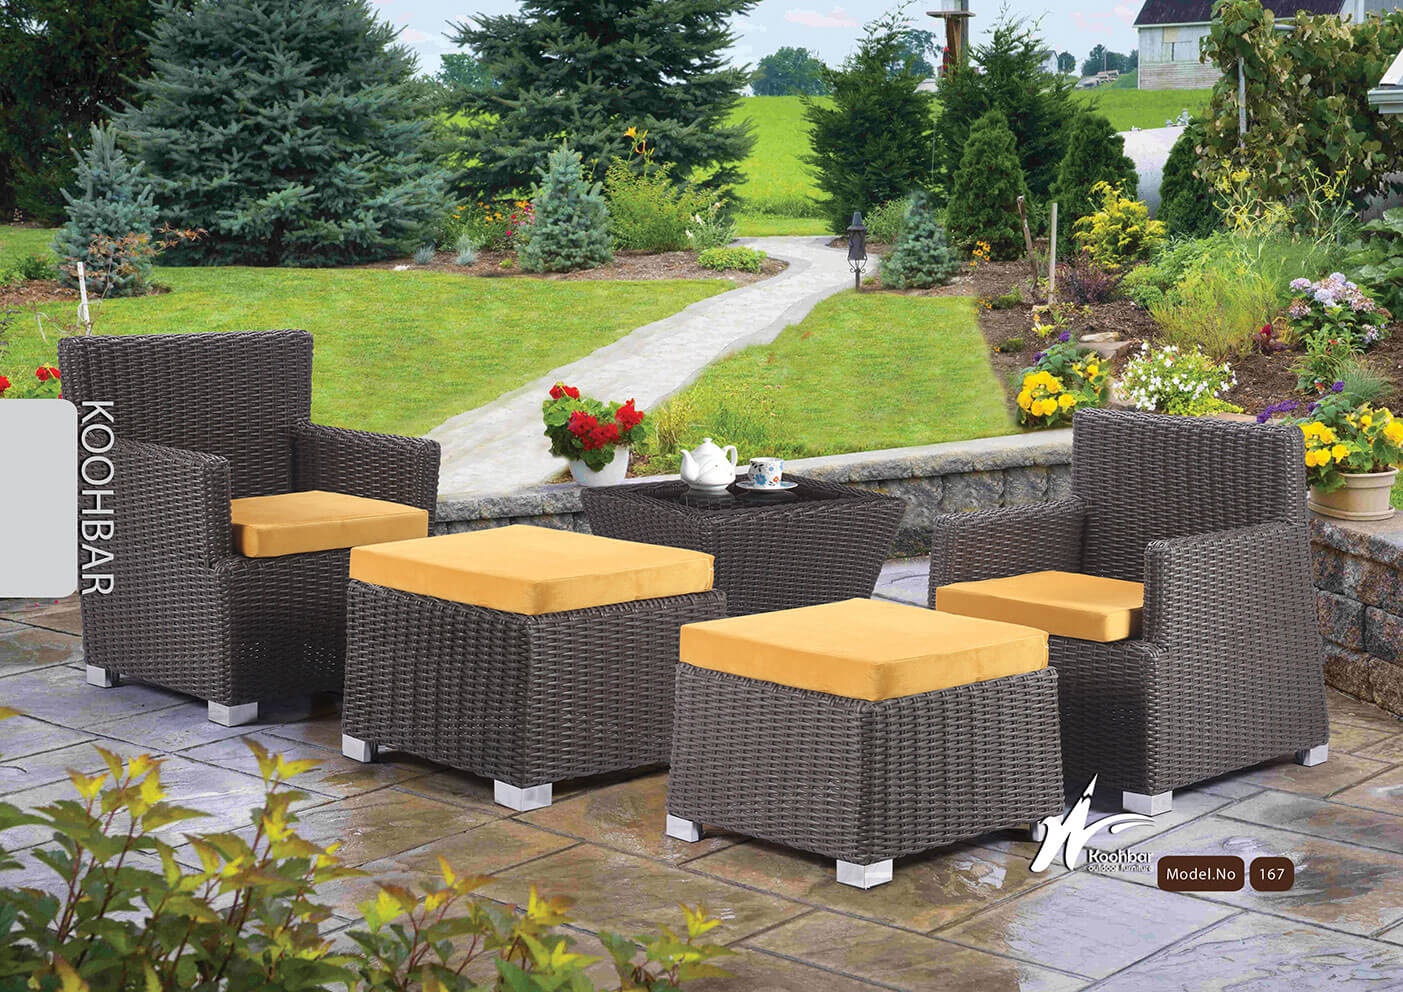 kohbar patio conversation sets 167 model0 - ست میز صندلی حصیری فضای باز کوهبر مدل ۱۶۷ -  - patio-conversation-sets